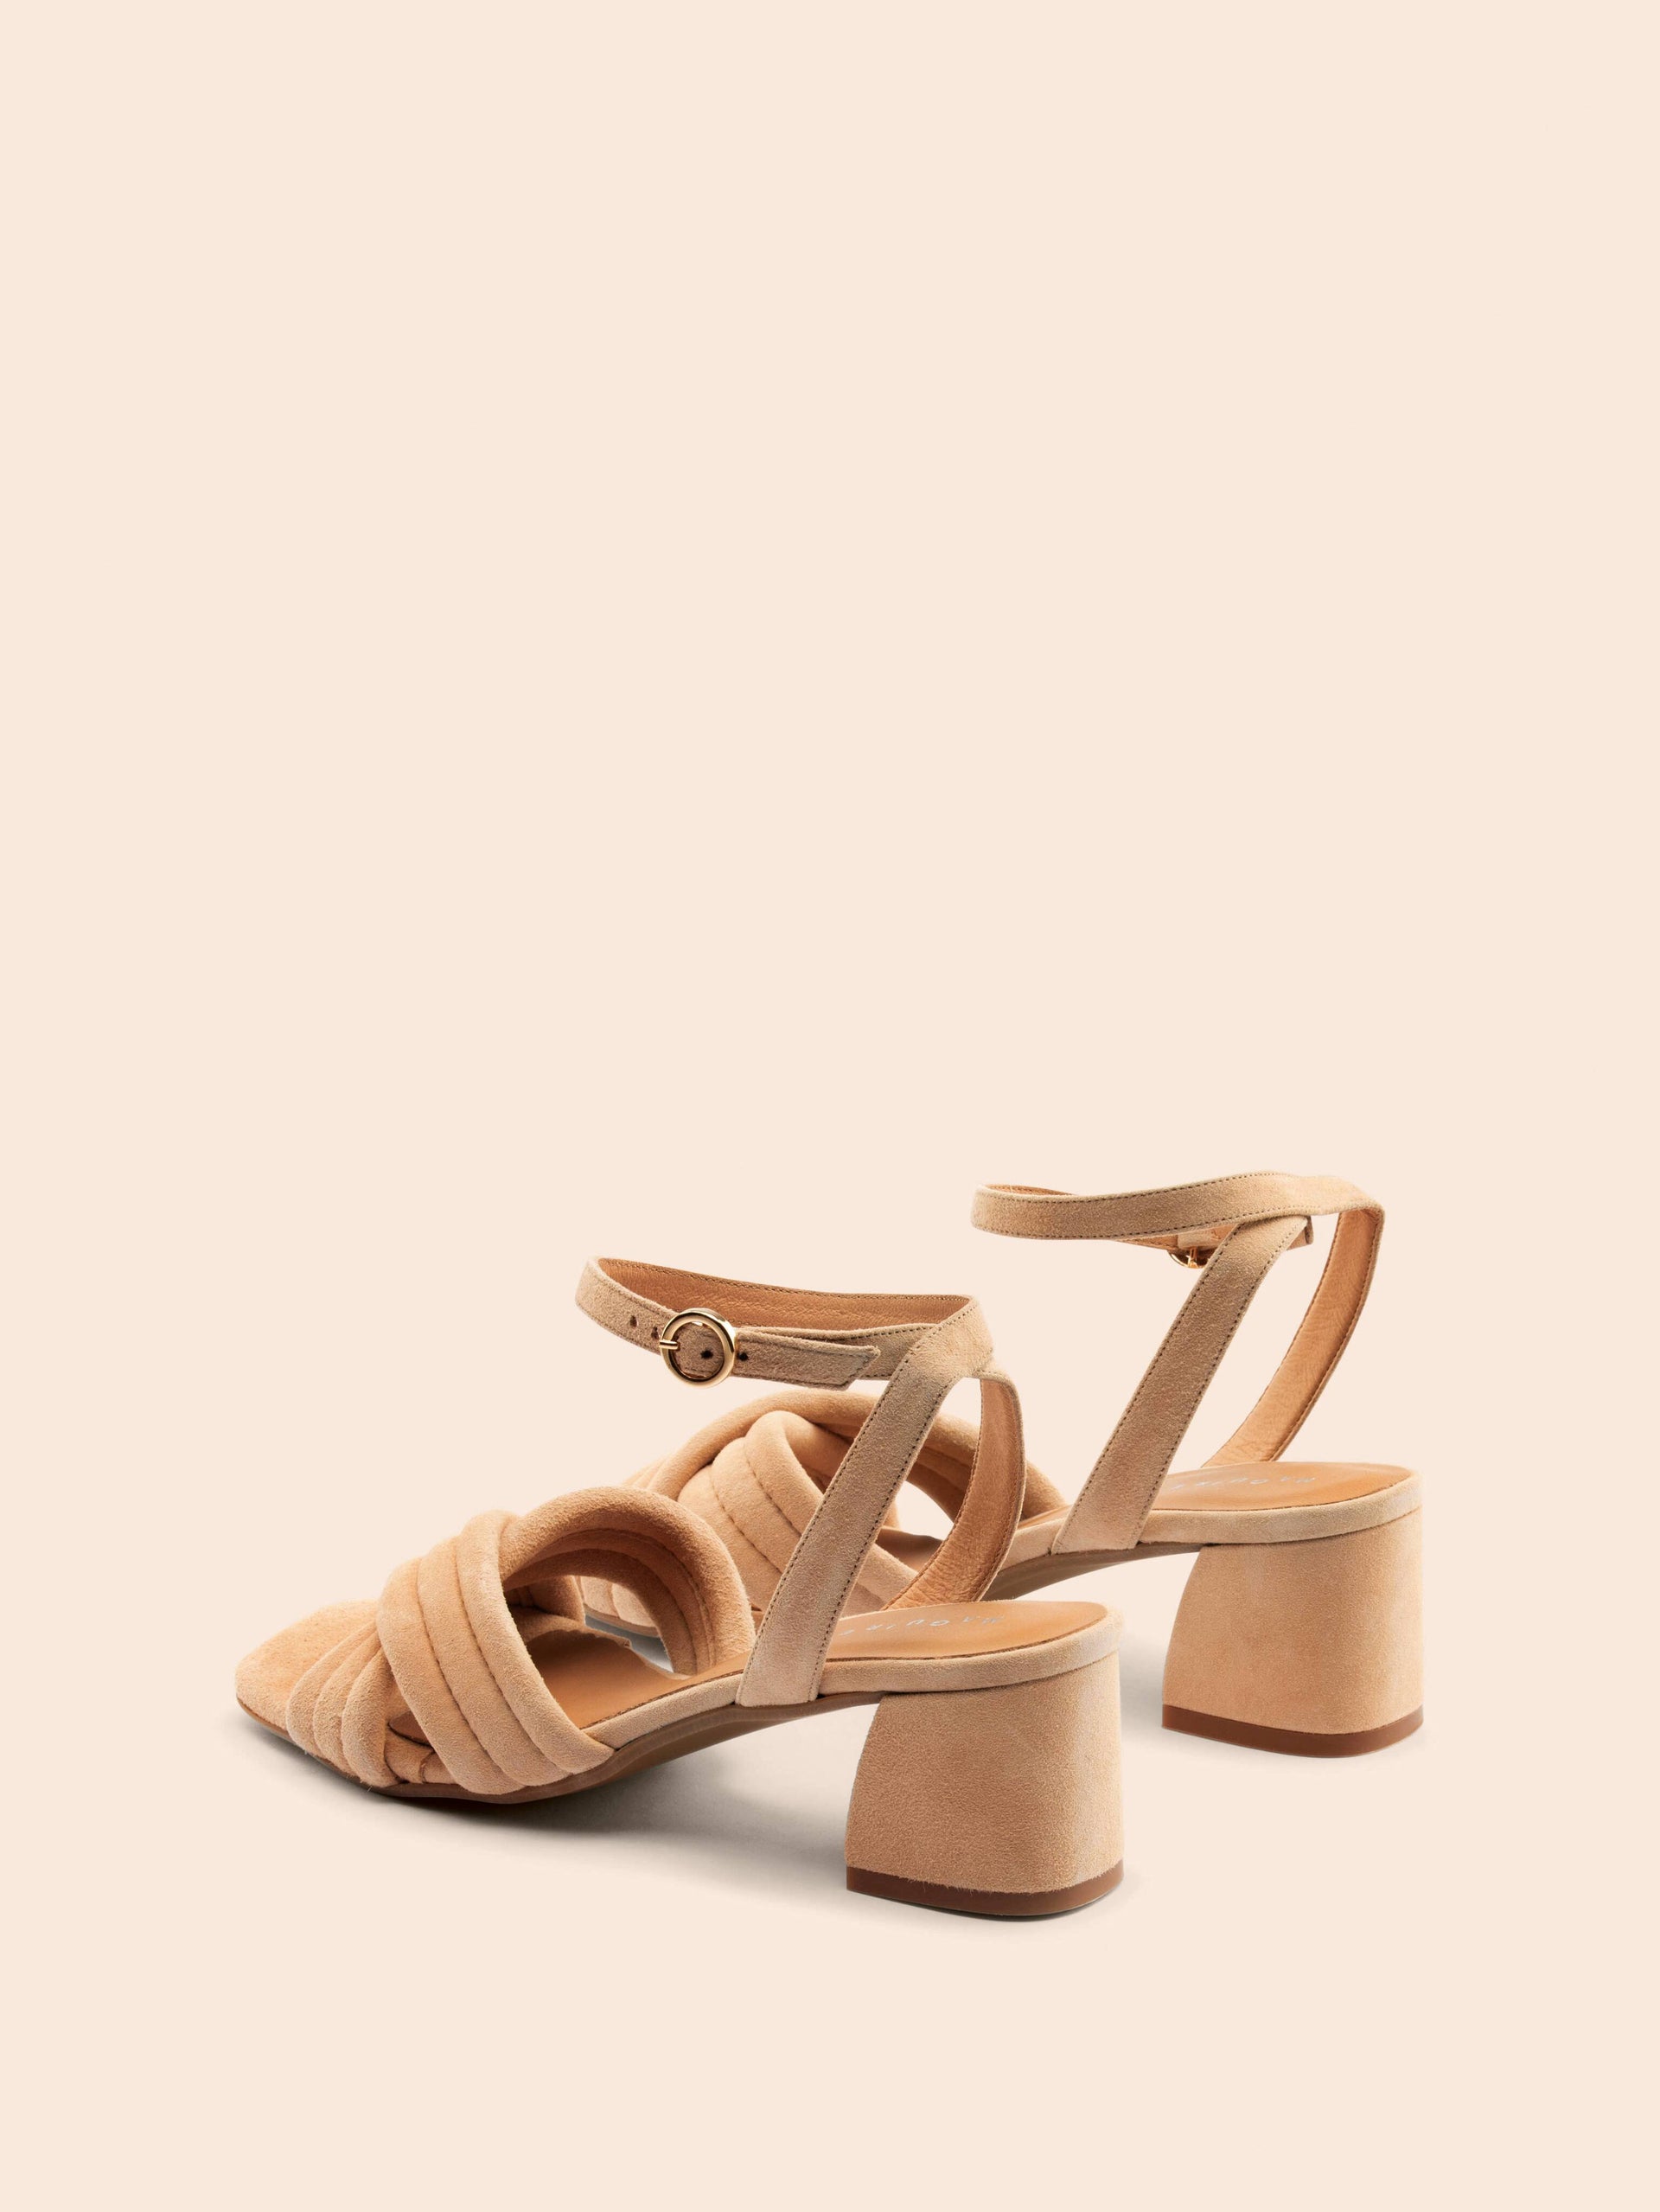 Adria Sand Heel